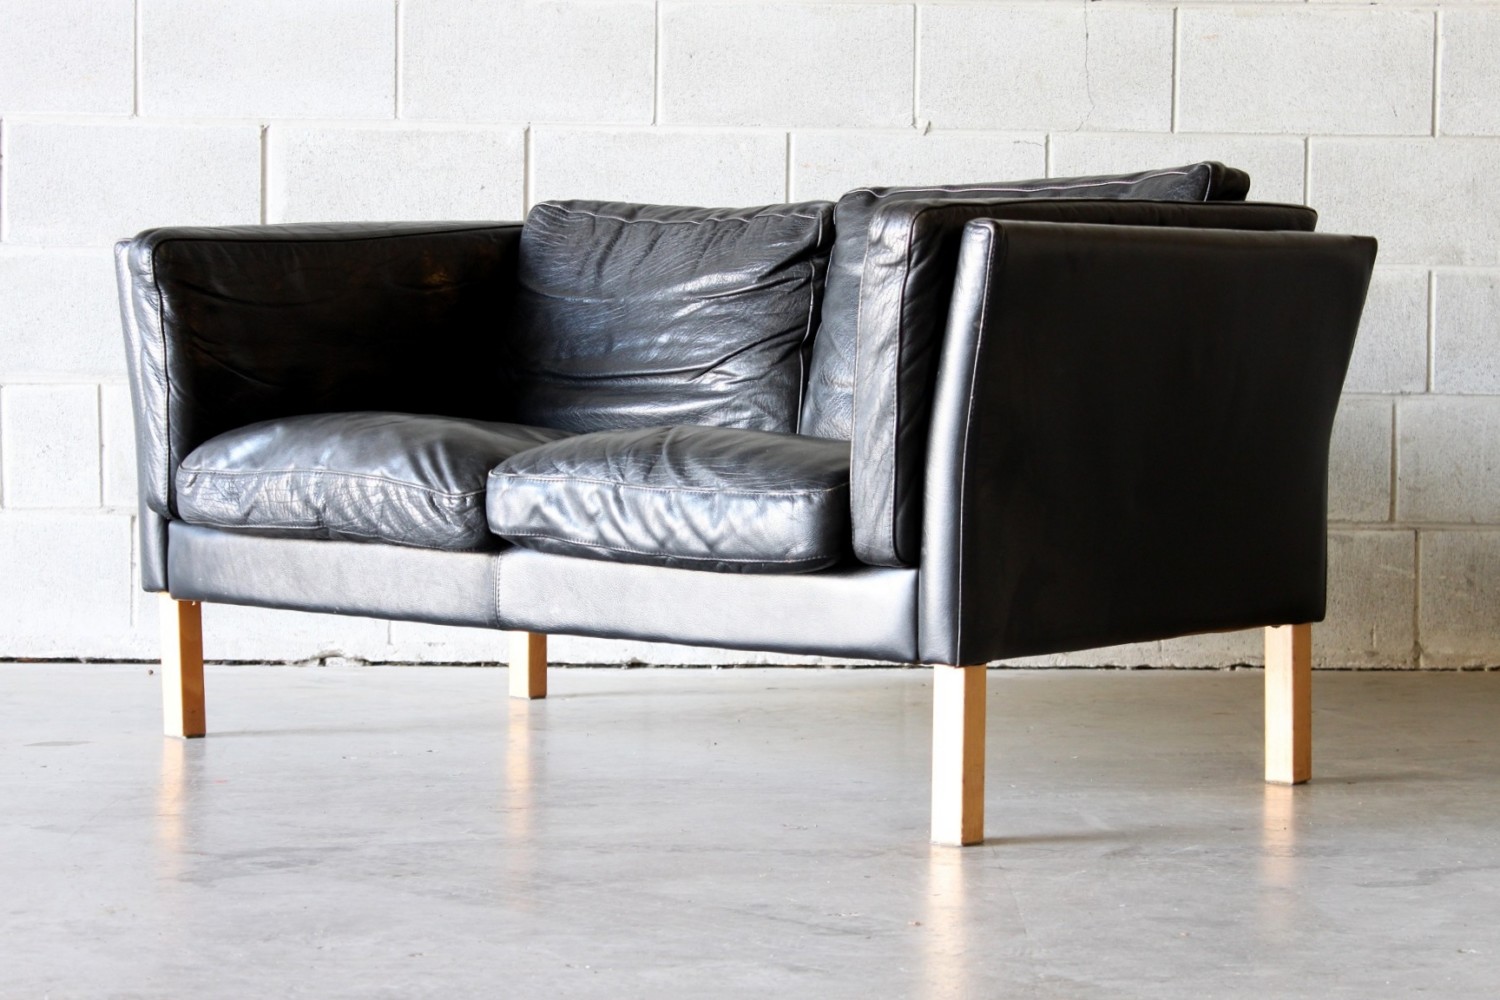 Pair of black leather vintage sofas